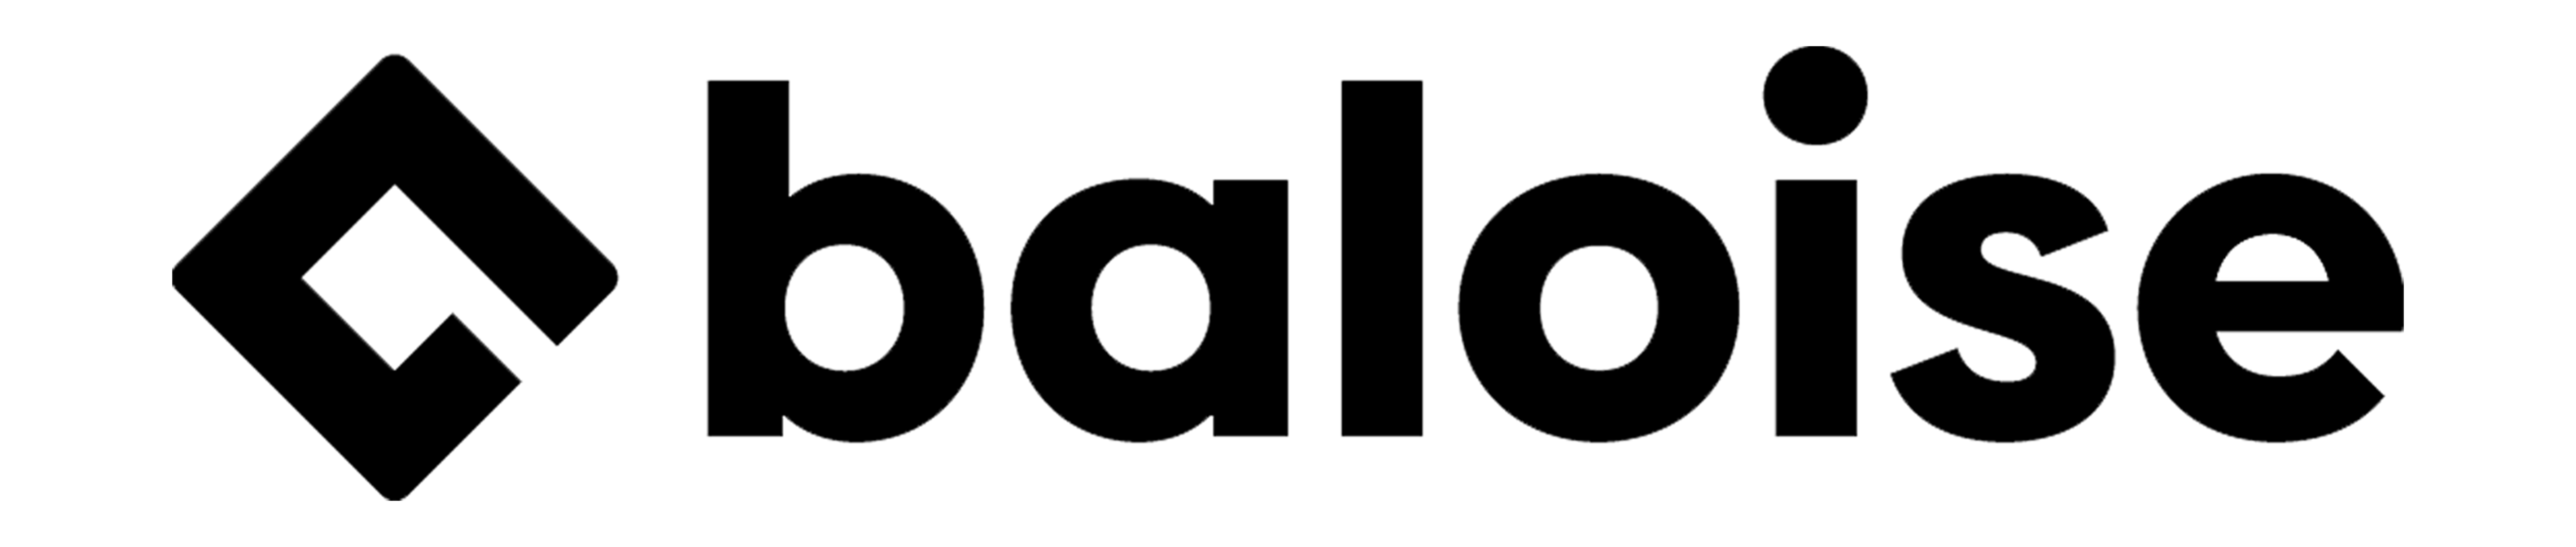 Testimonial Logo 2